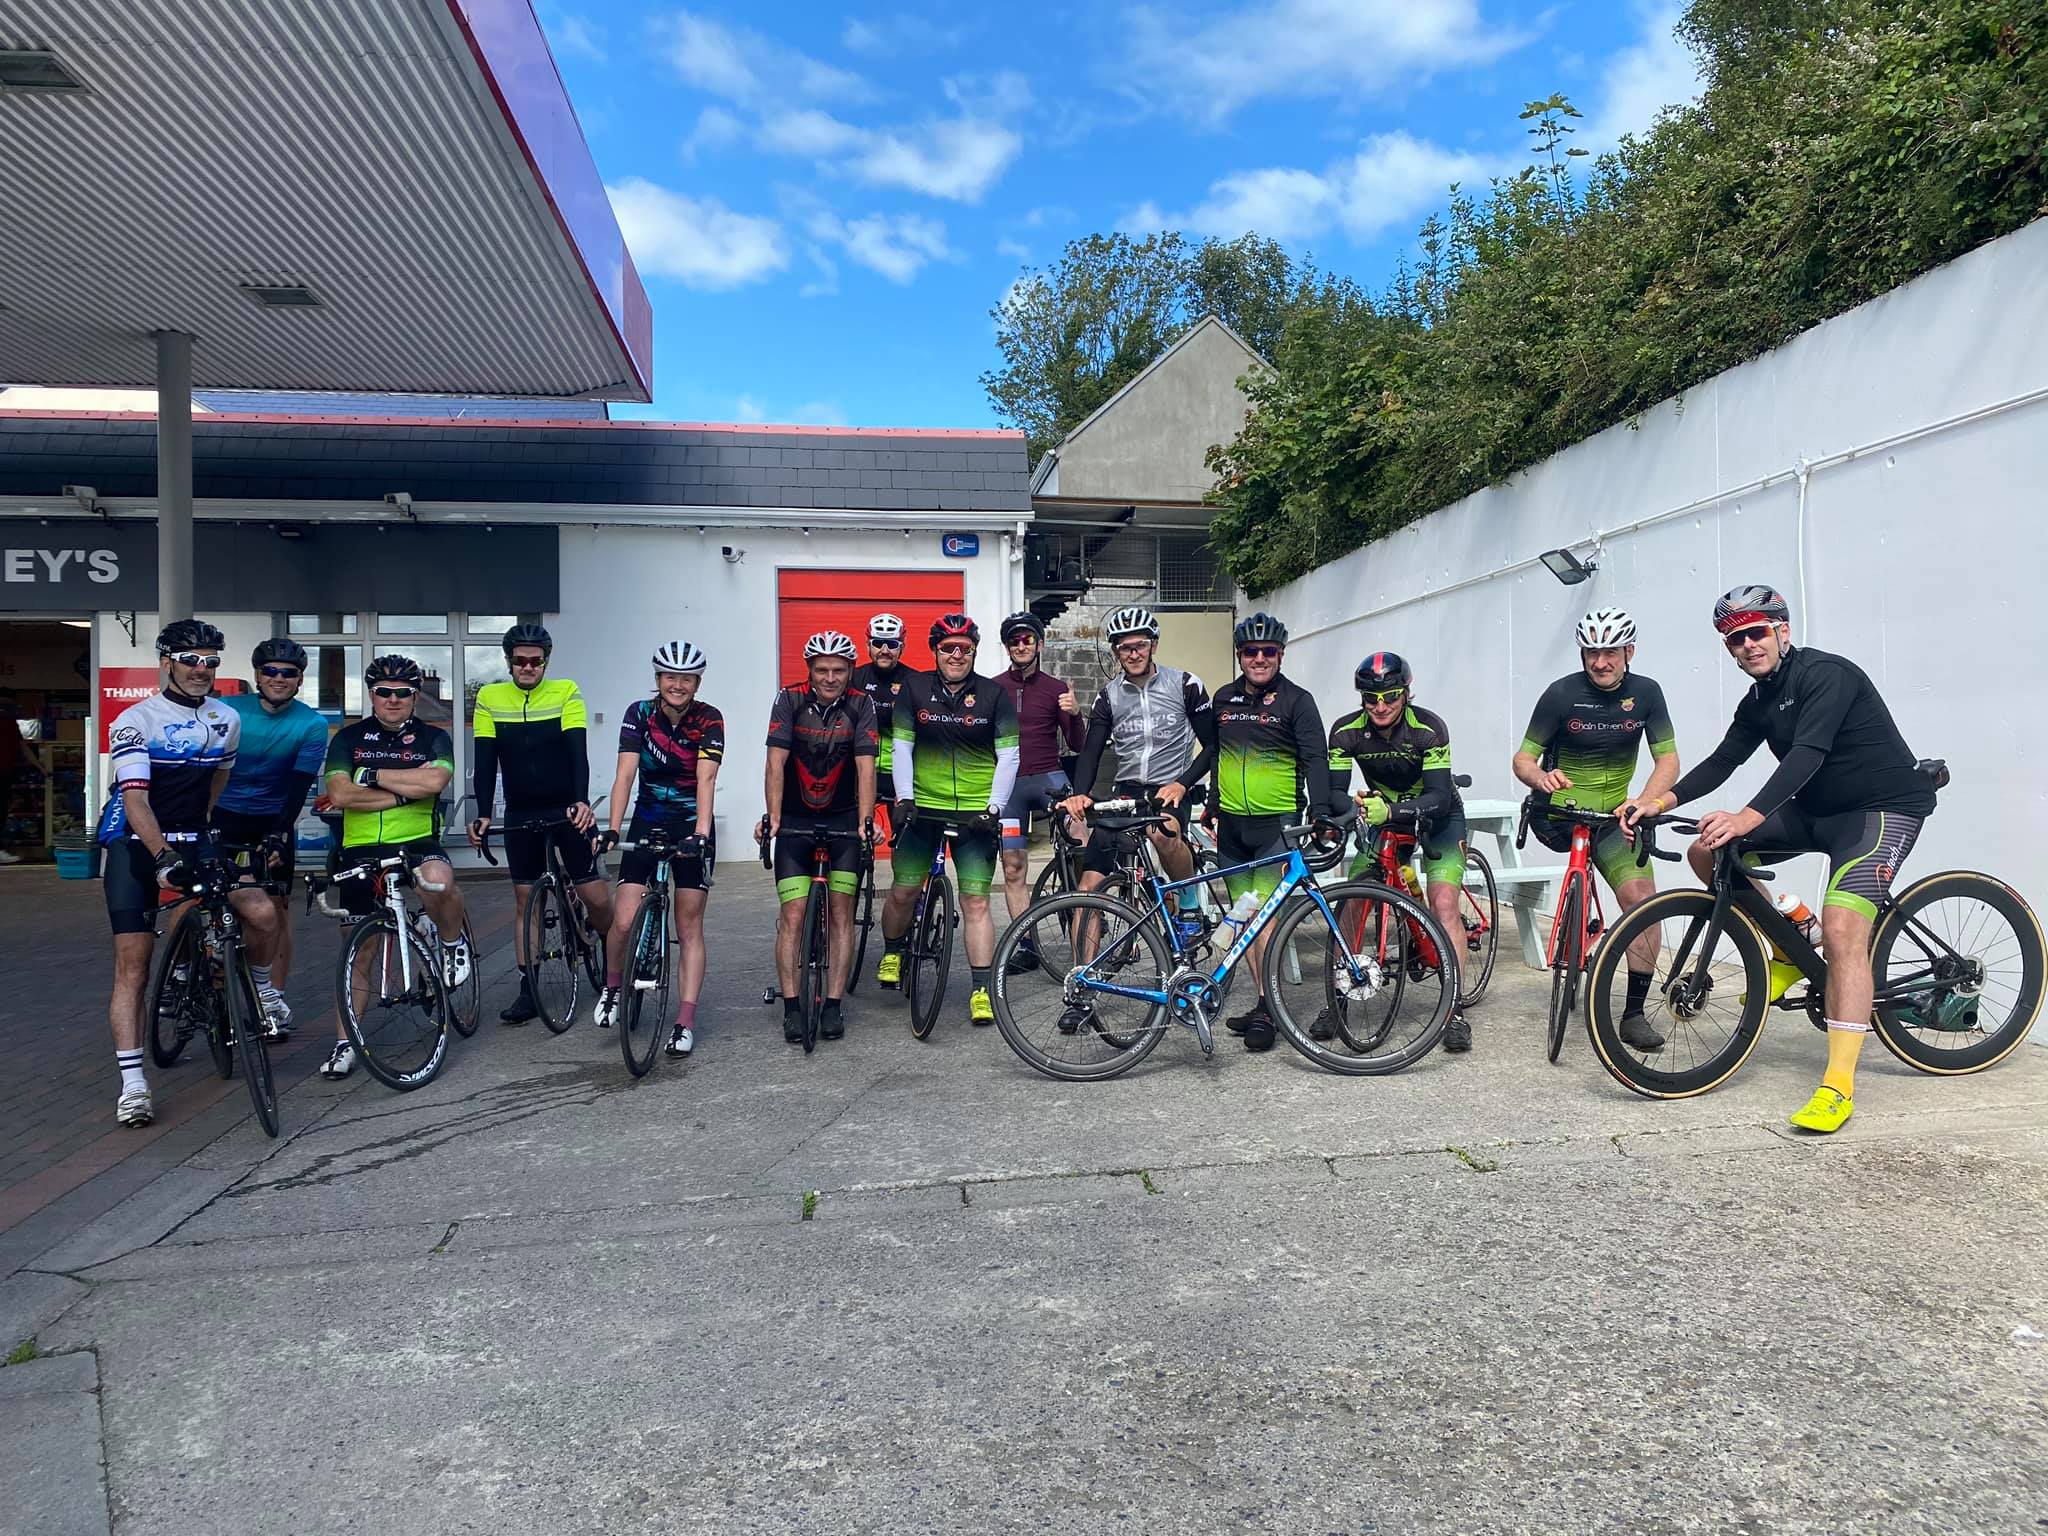 Bottecchia Cycling Club is drinking Coffee at Feeney’s Dromore West Co. Sligo